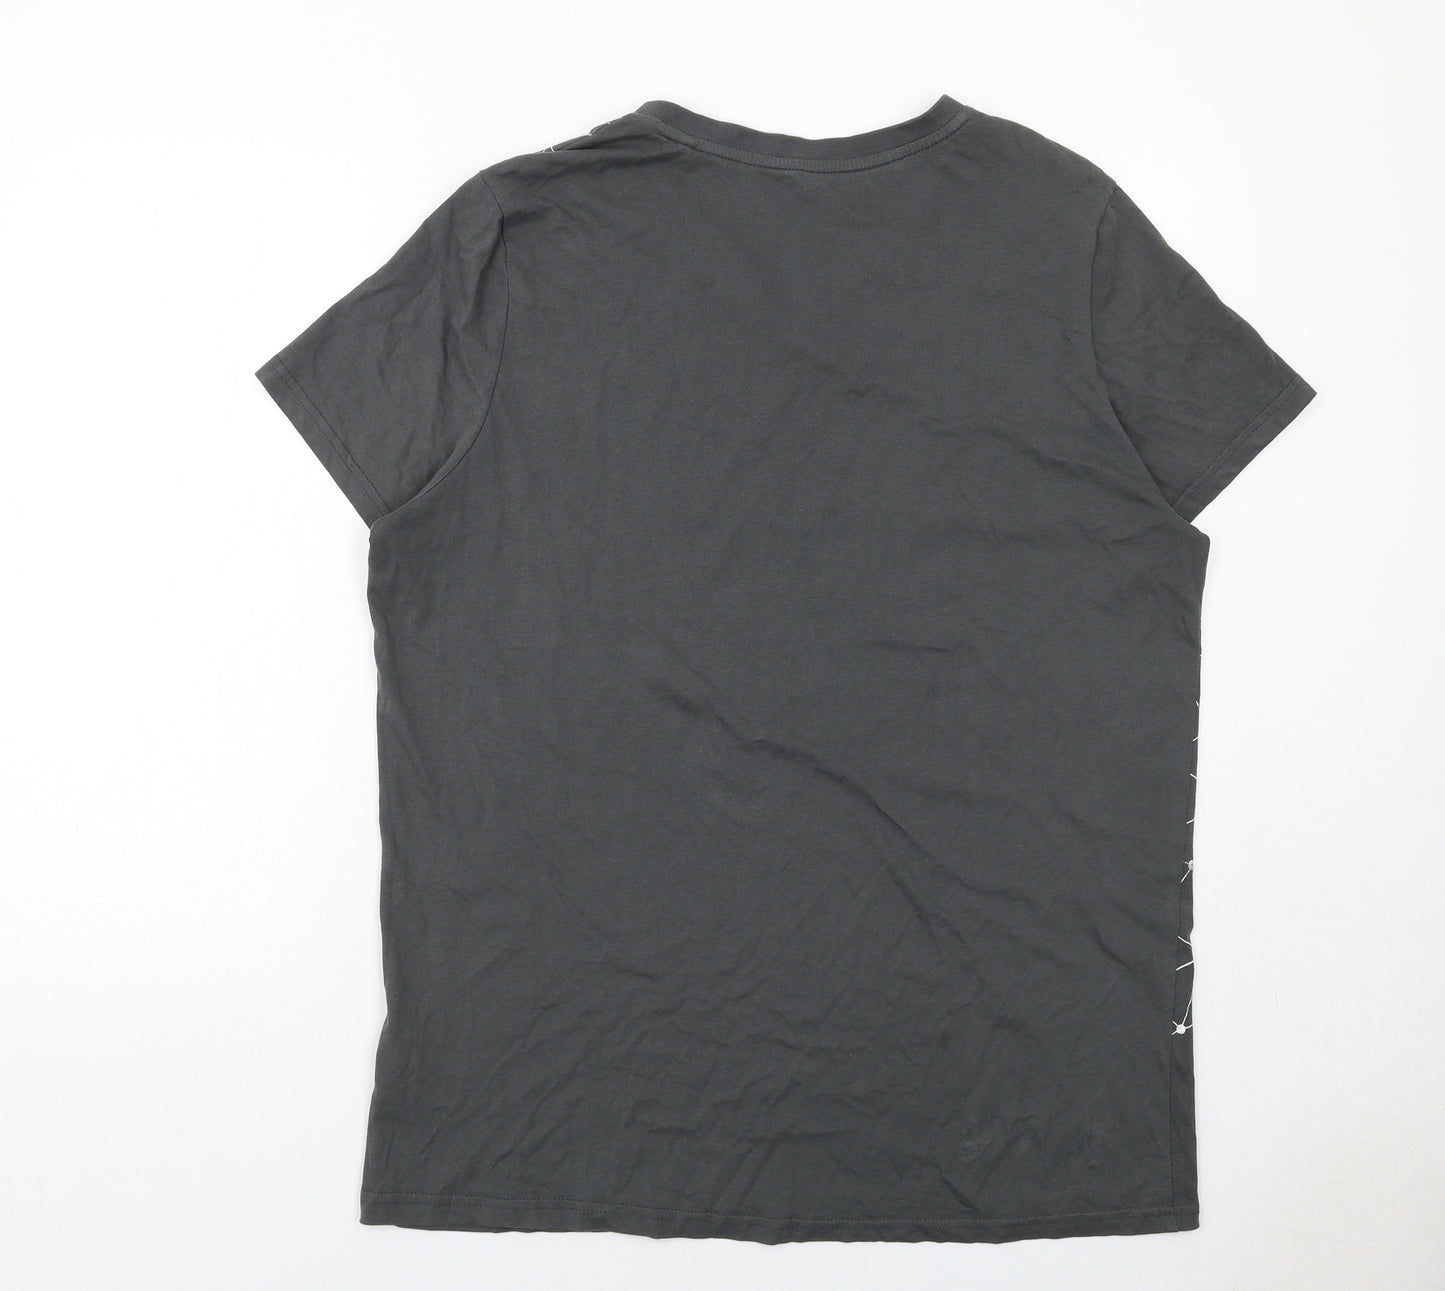 Livergy Mens Grey Geometric Cotton T-Shirt Size XL V-Neck